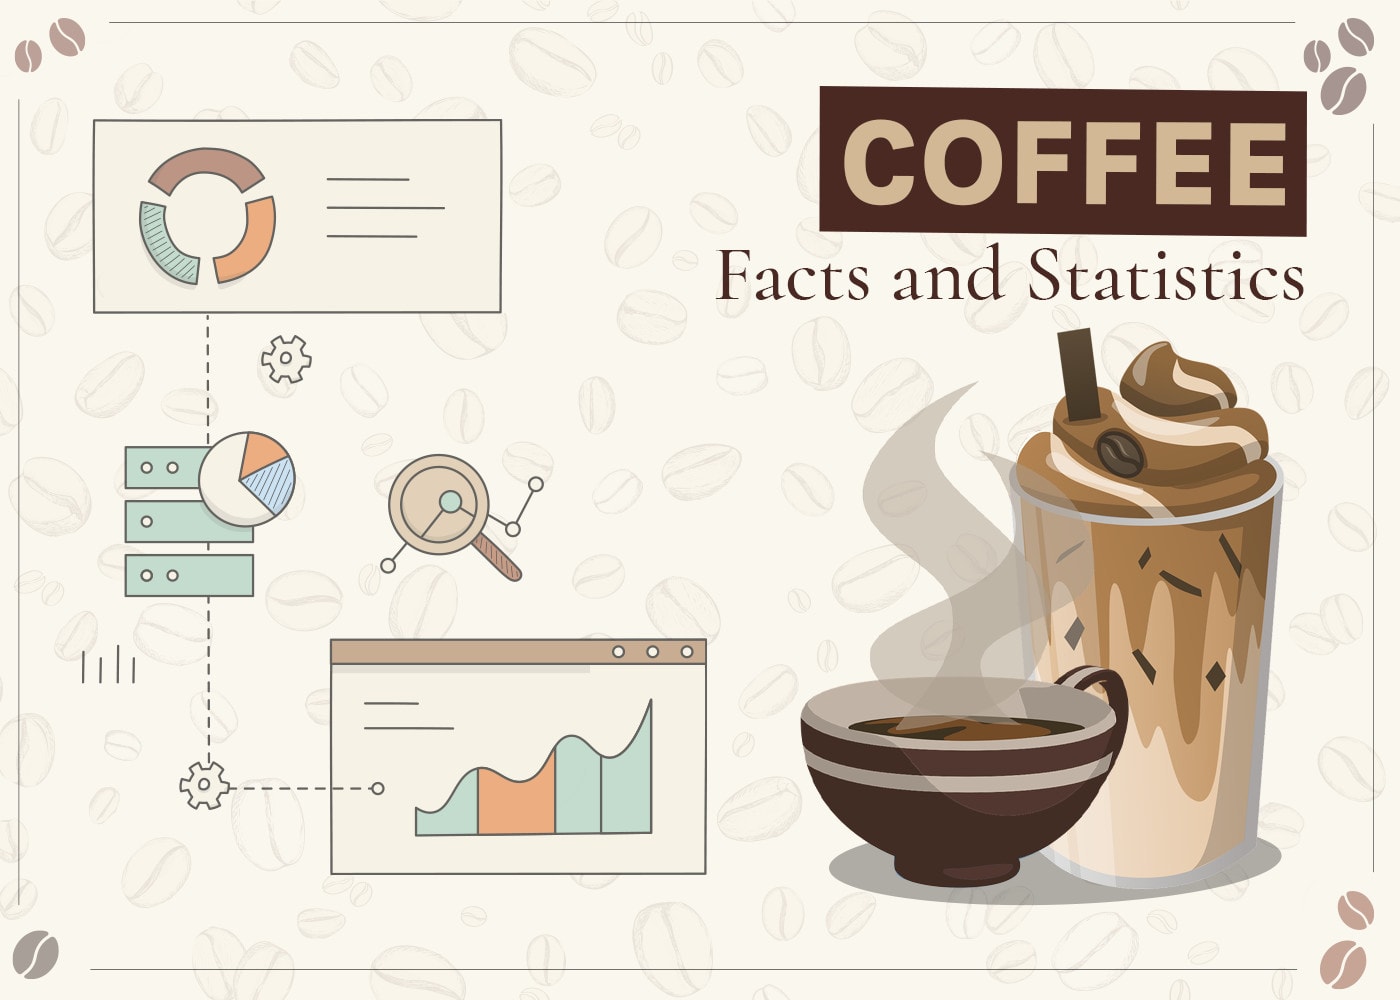 Coffee Statistics